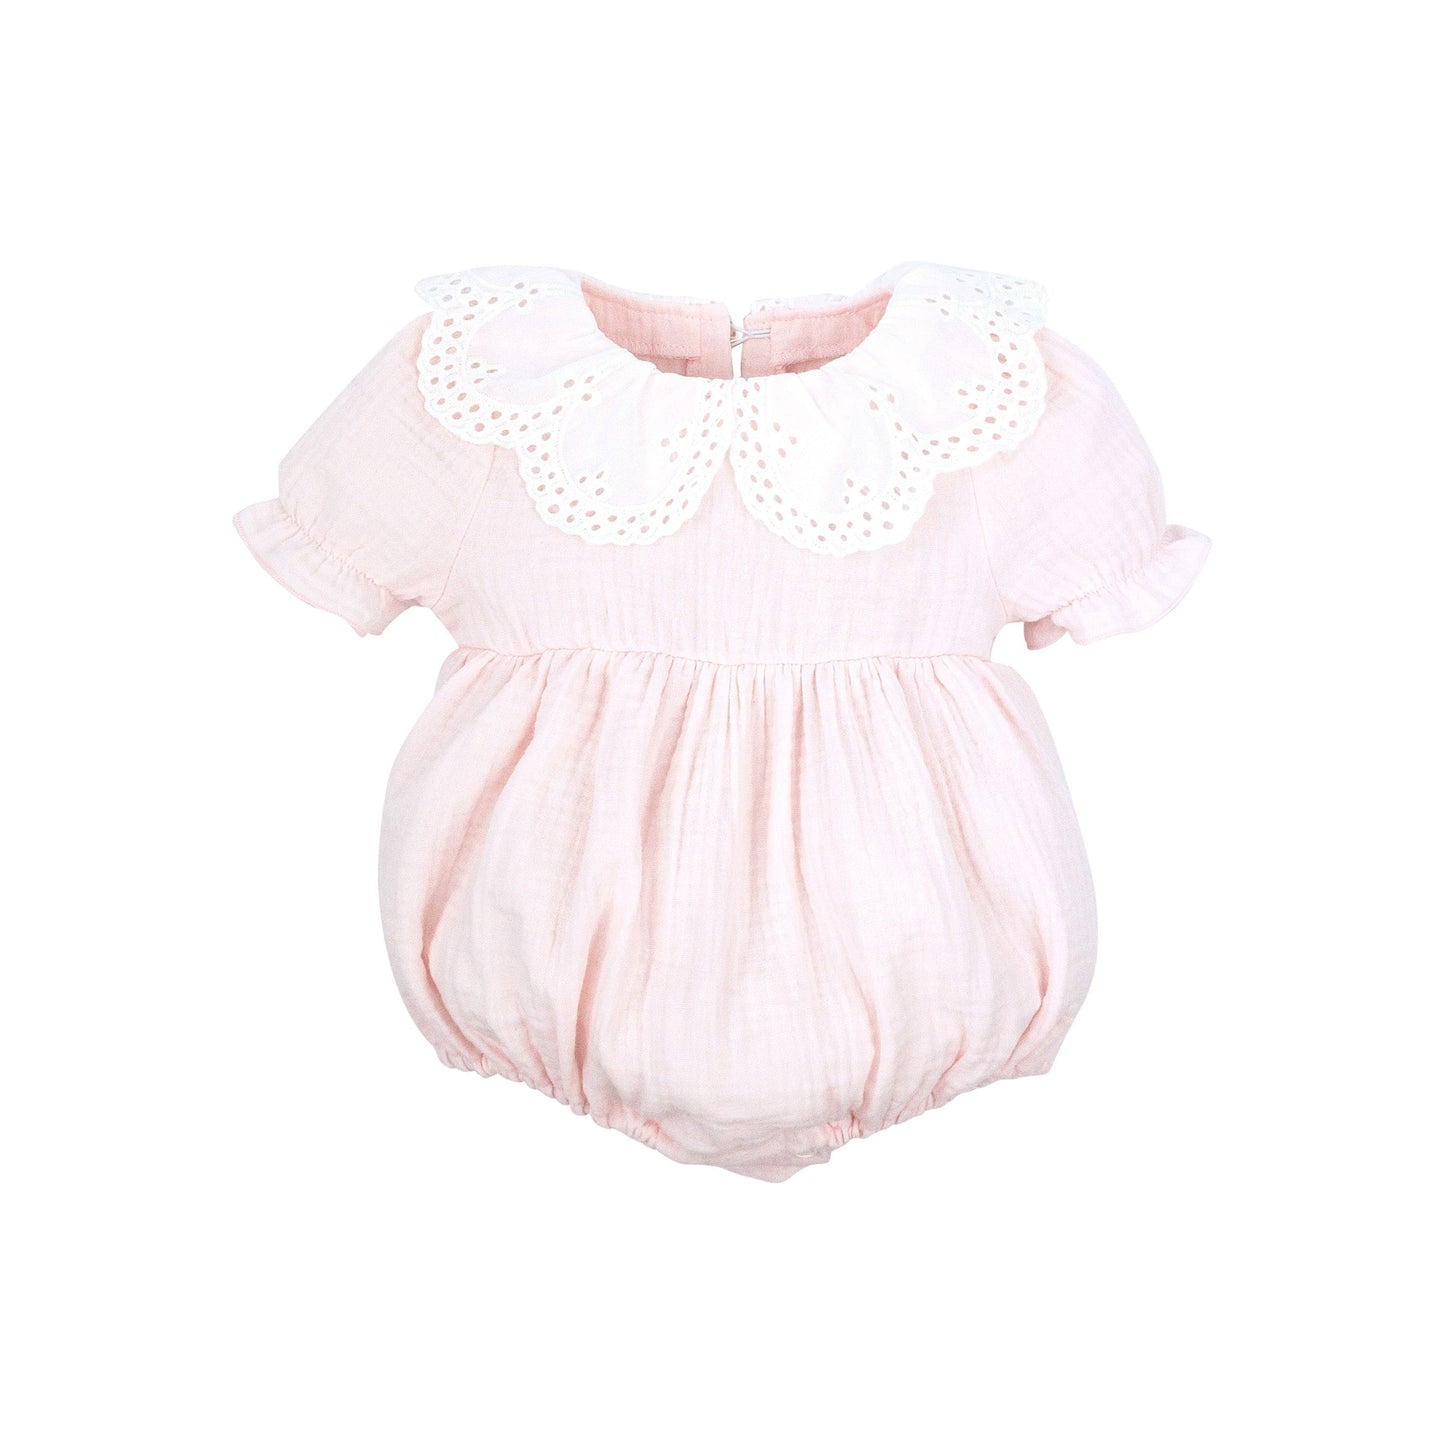 Pink baby girls romper with pretty collar by Jamiks - Adora Childrenswear 